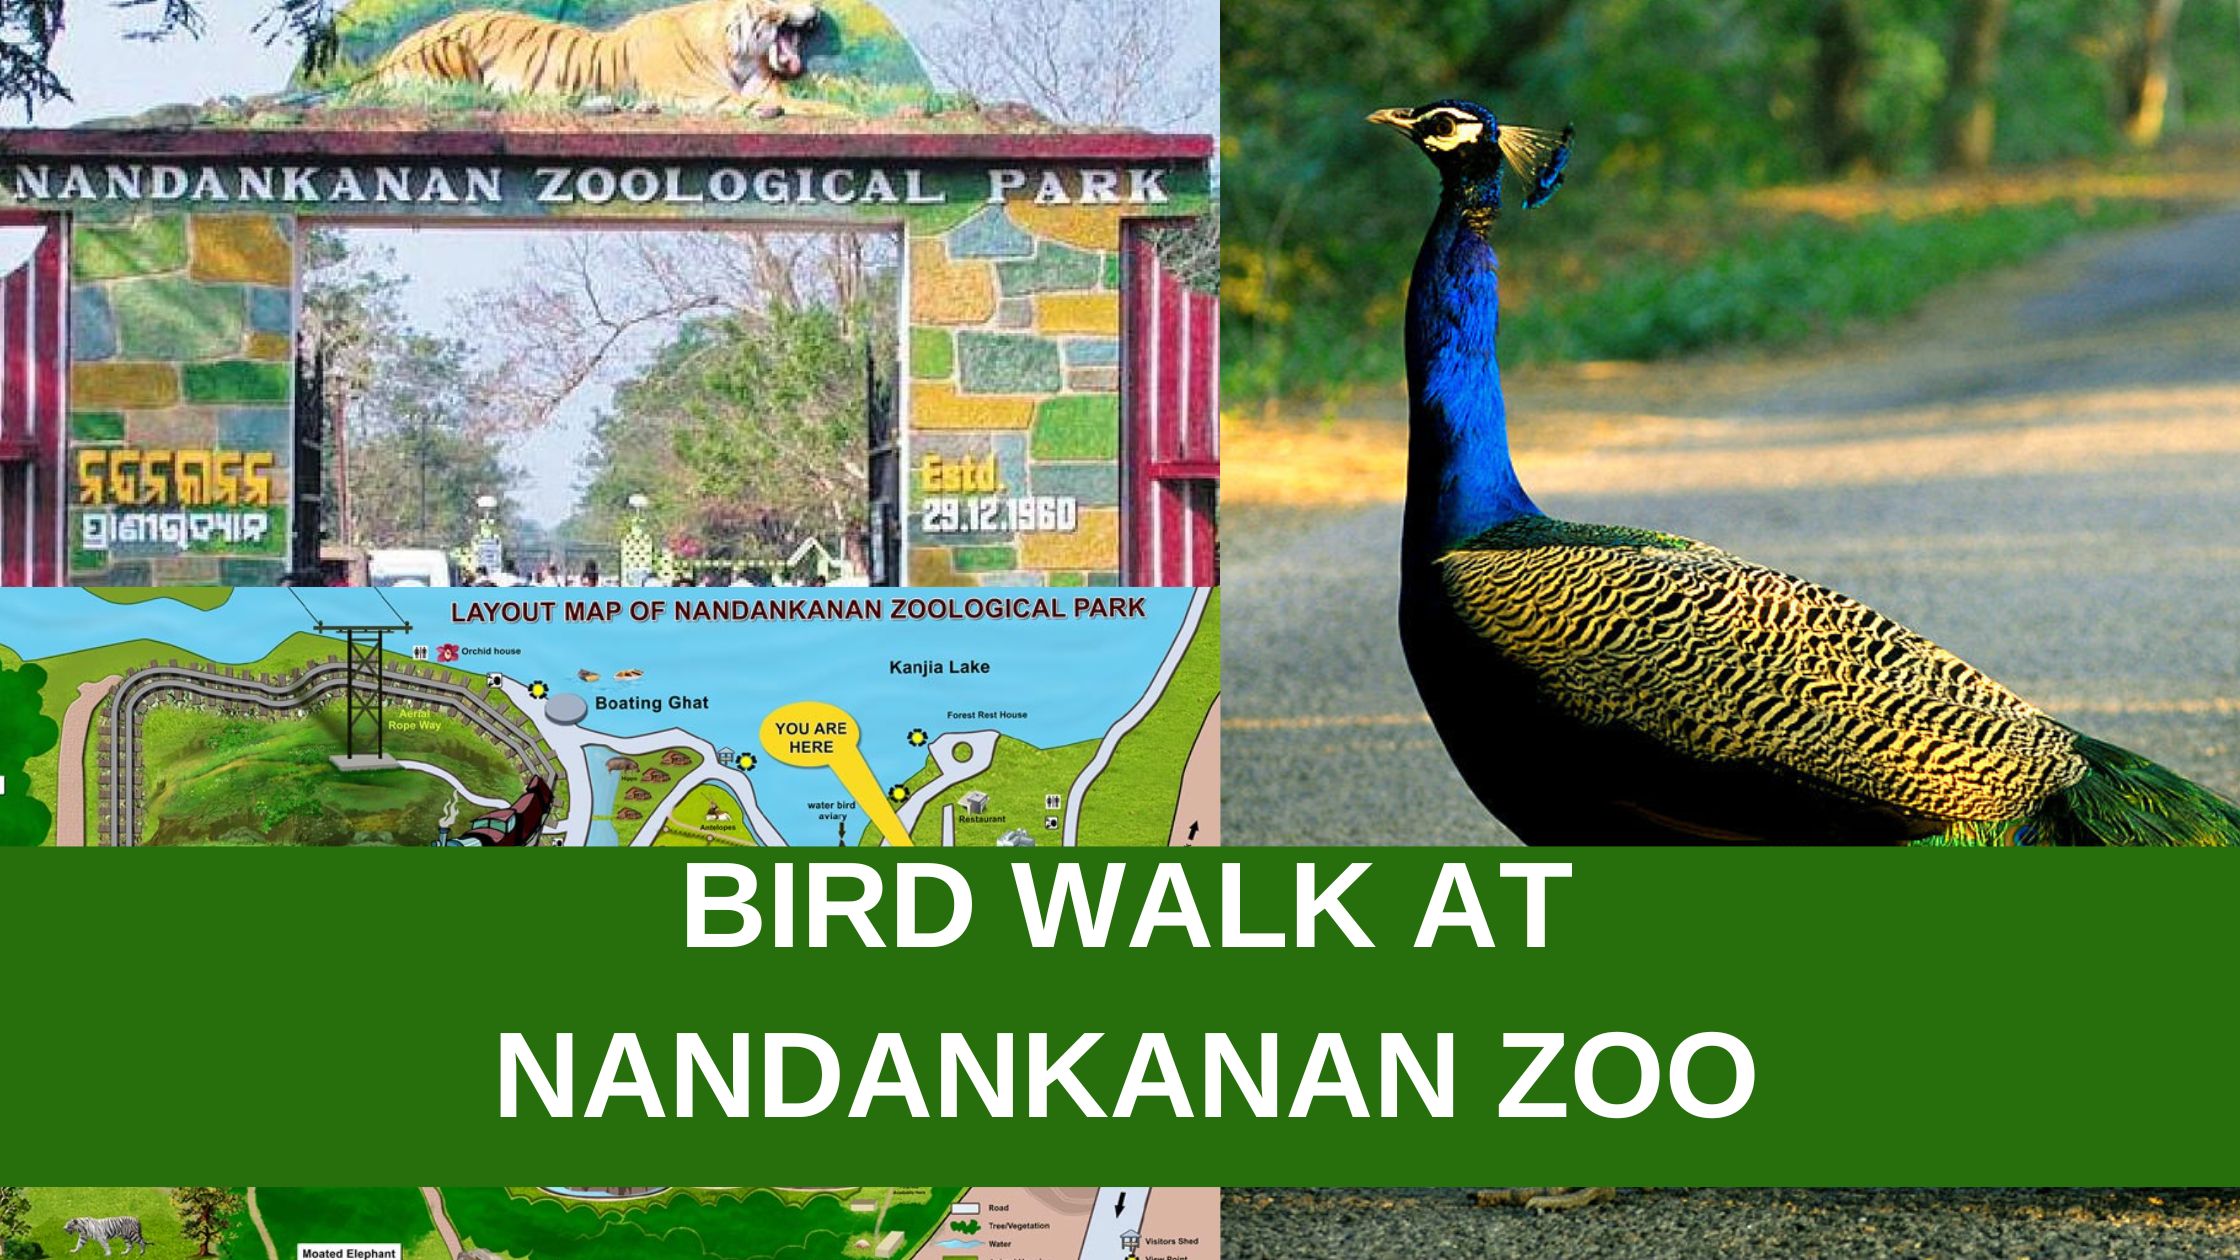 Bird walk at NandanKanan Zoo